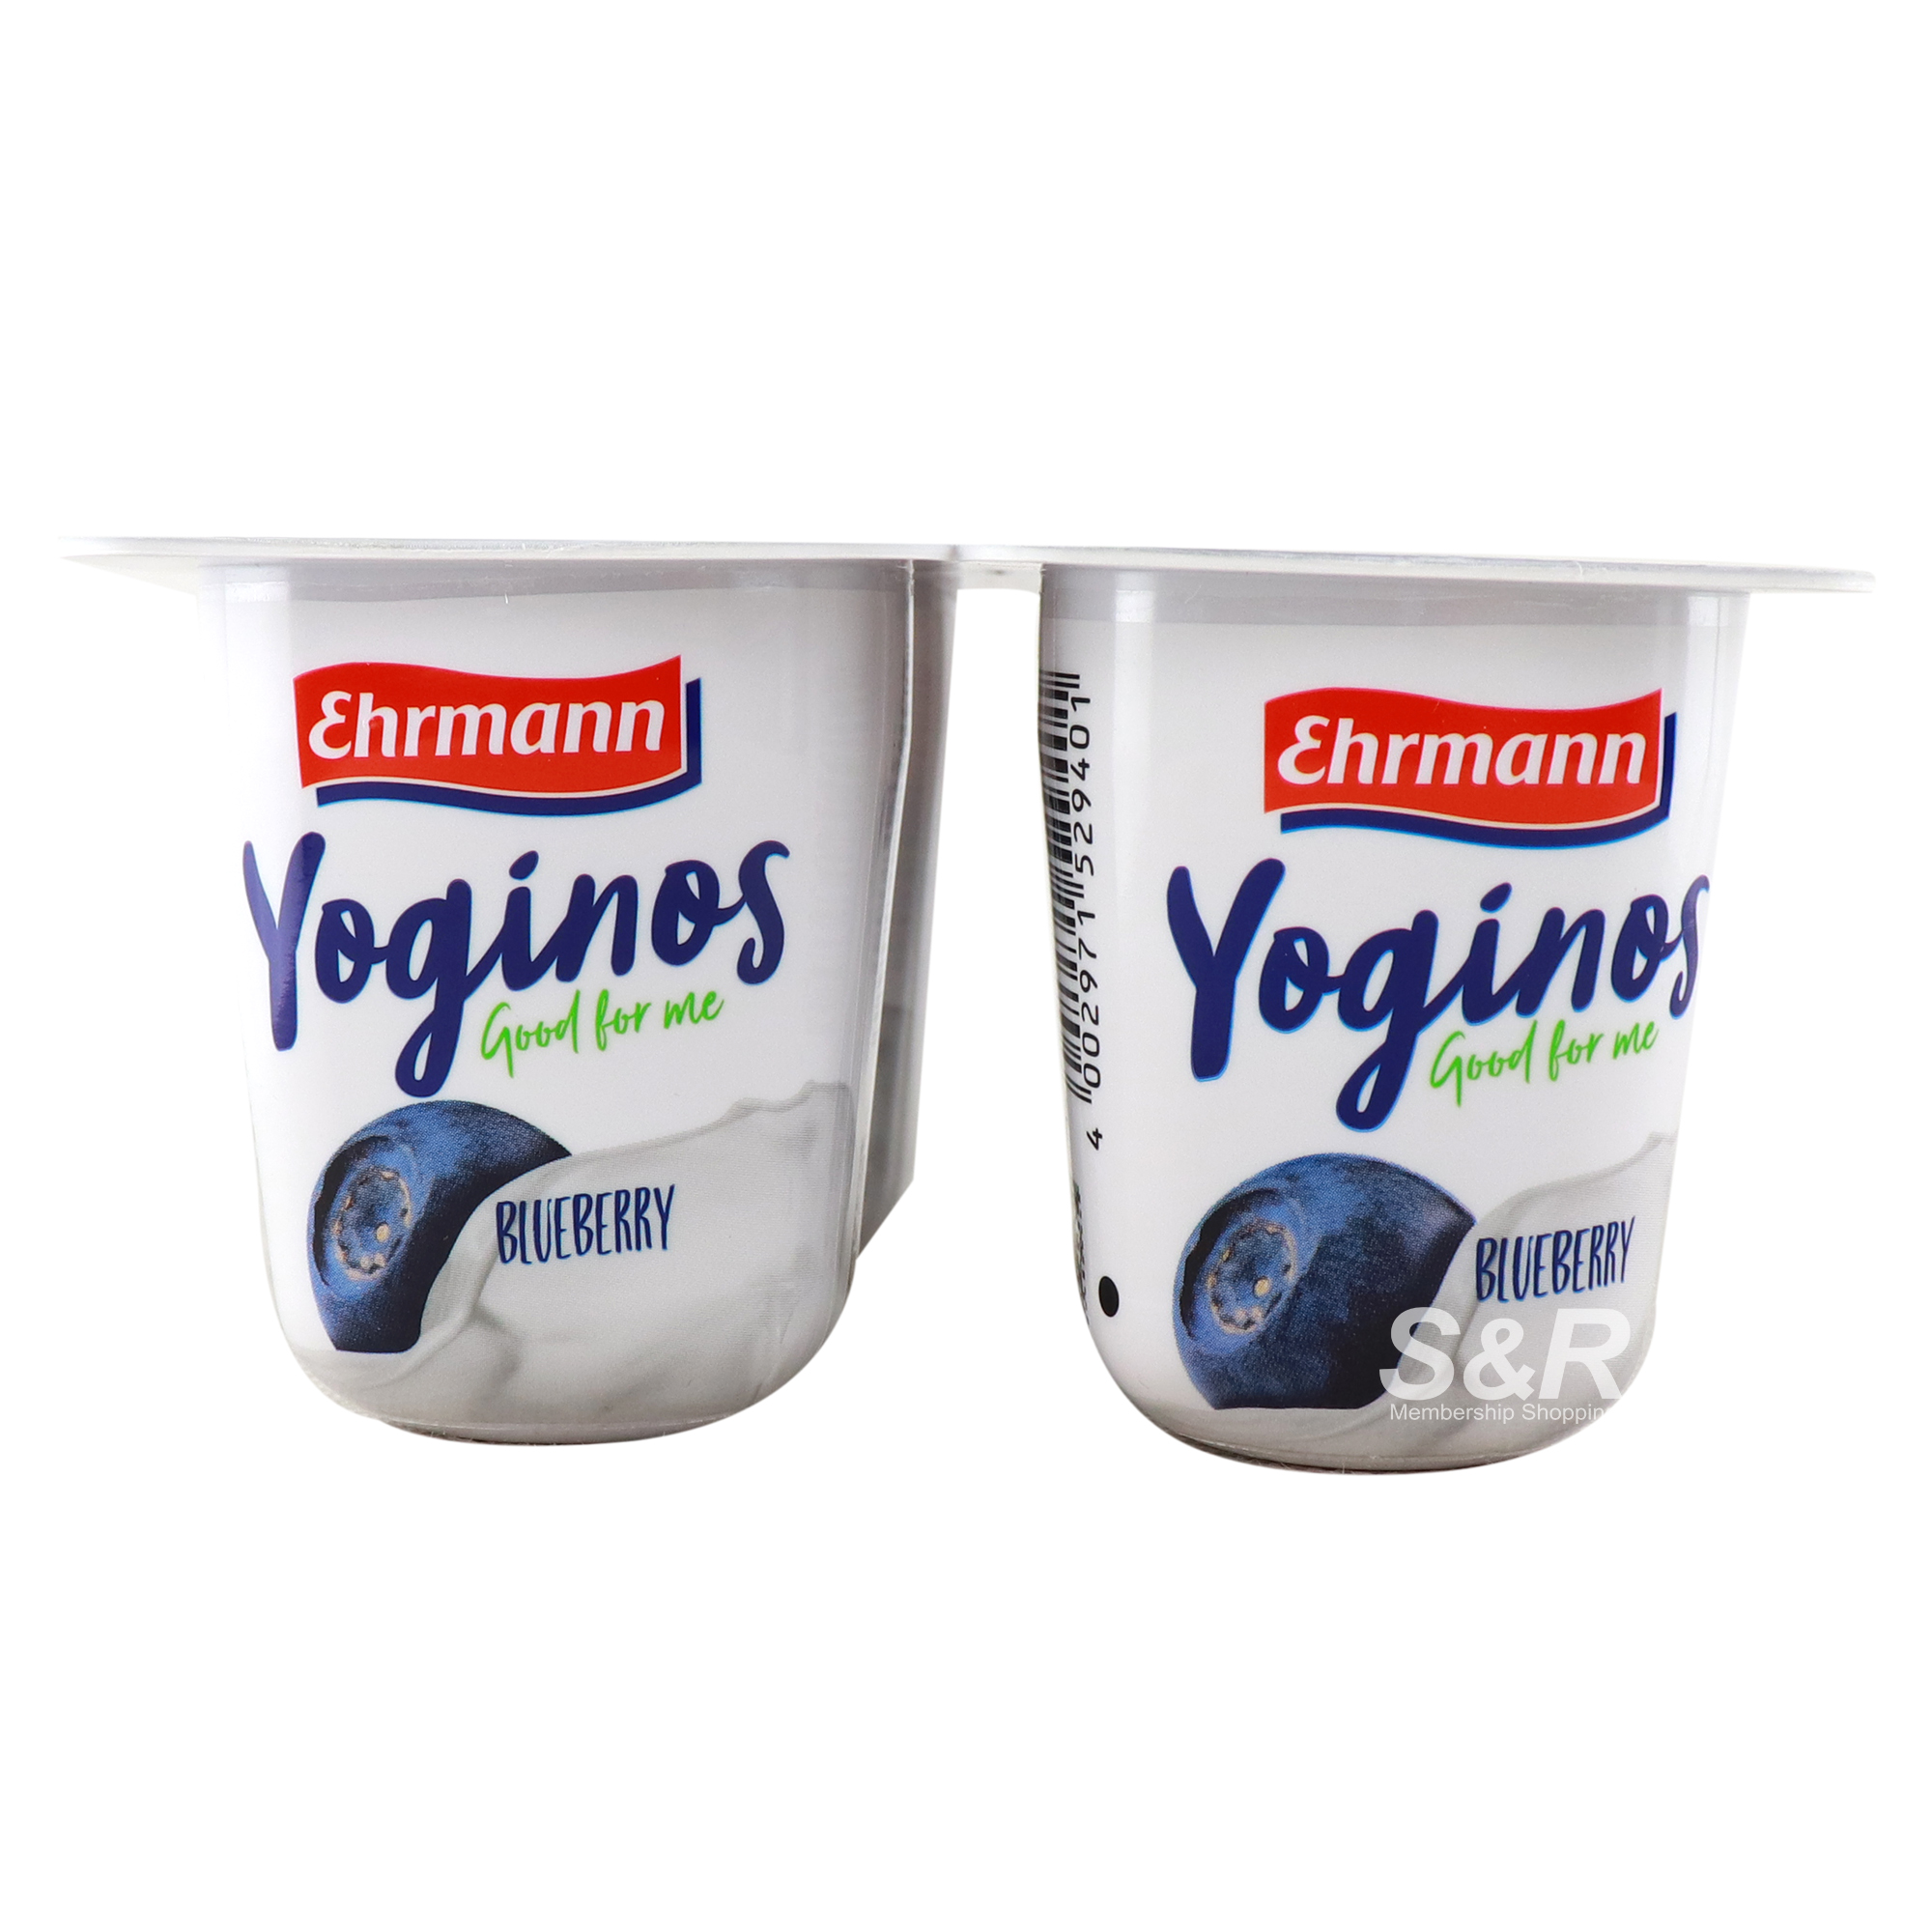 Ehrmann Yoginos Blueberry Flavor 4pcs